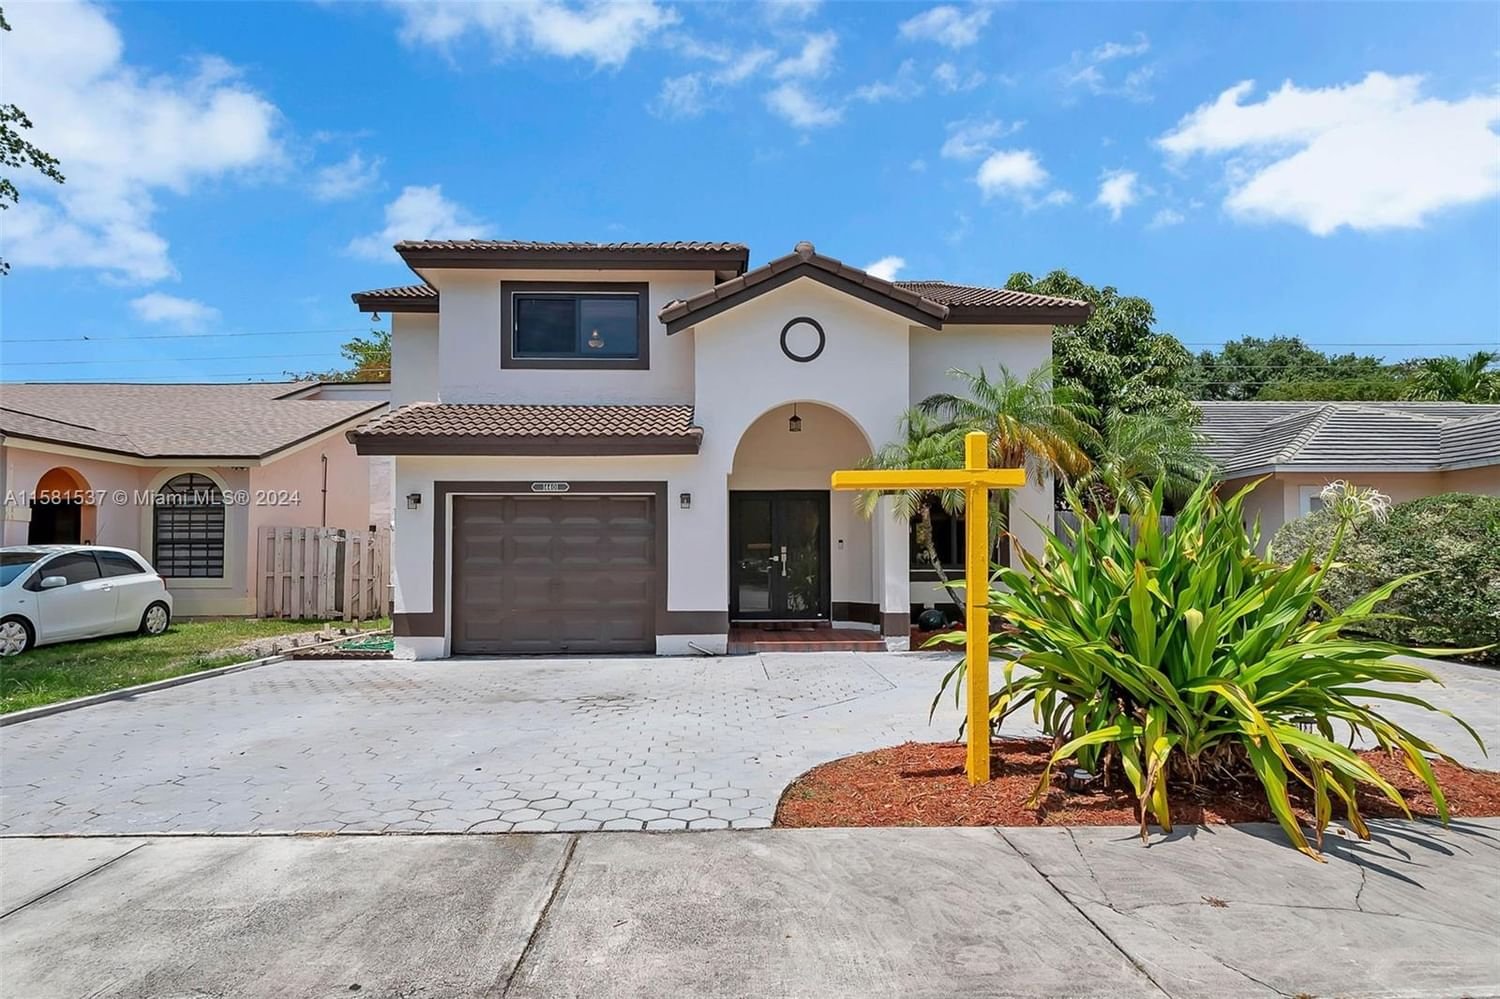 Real estate property located at 14401 112th Ter, Miami-Dade County, CALIFORNIA HILLS, Miami, FL